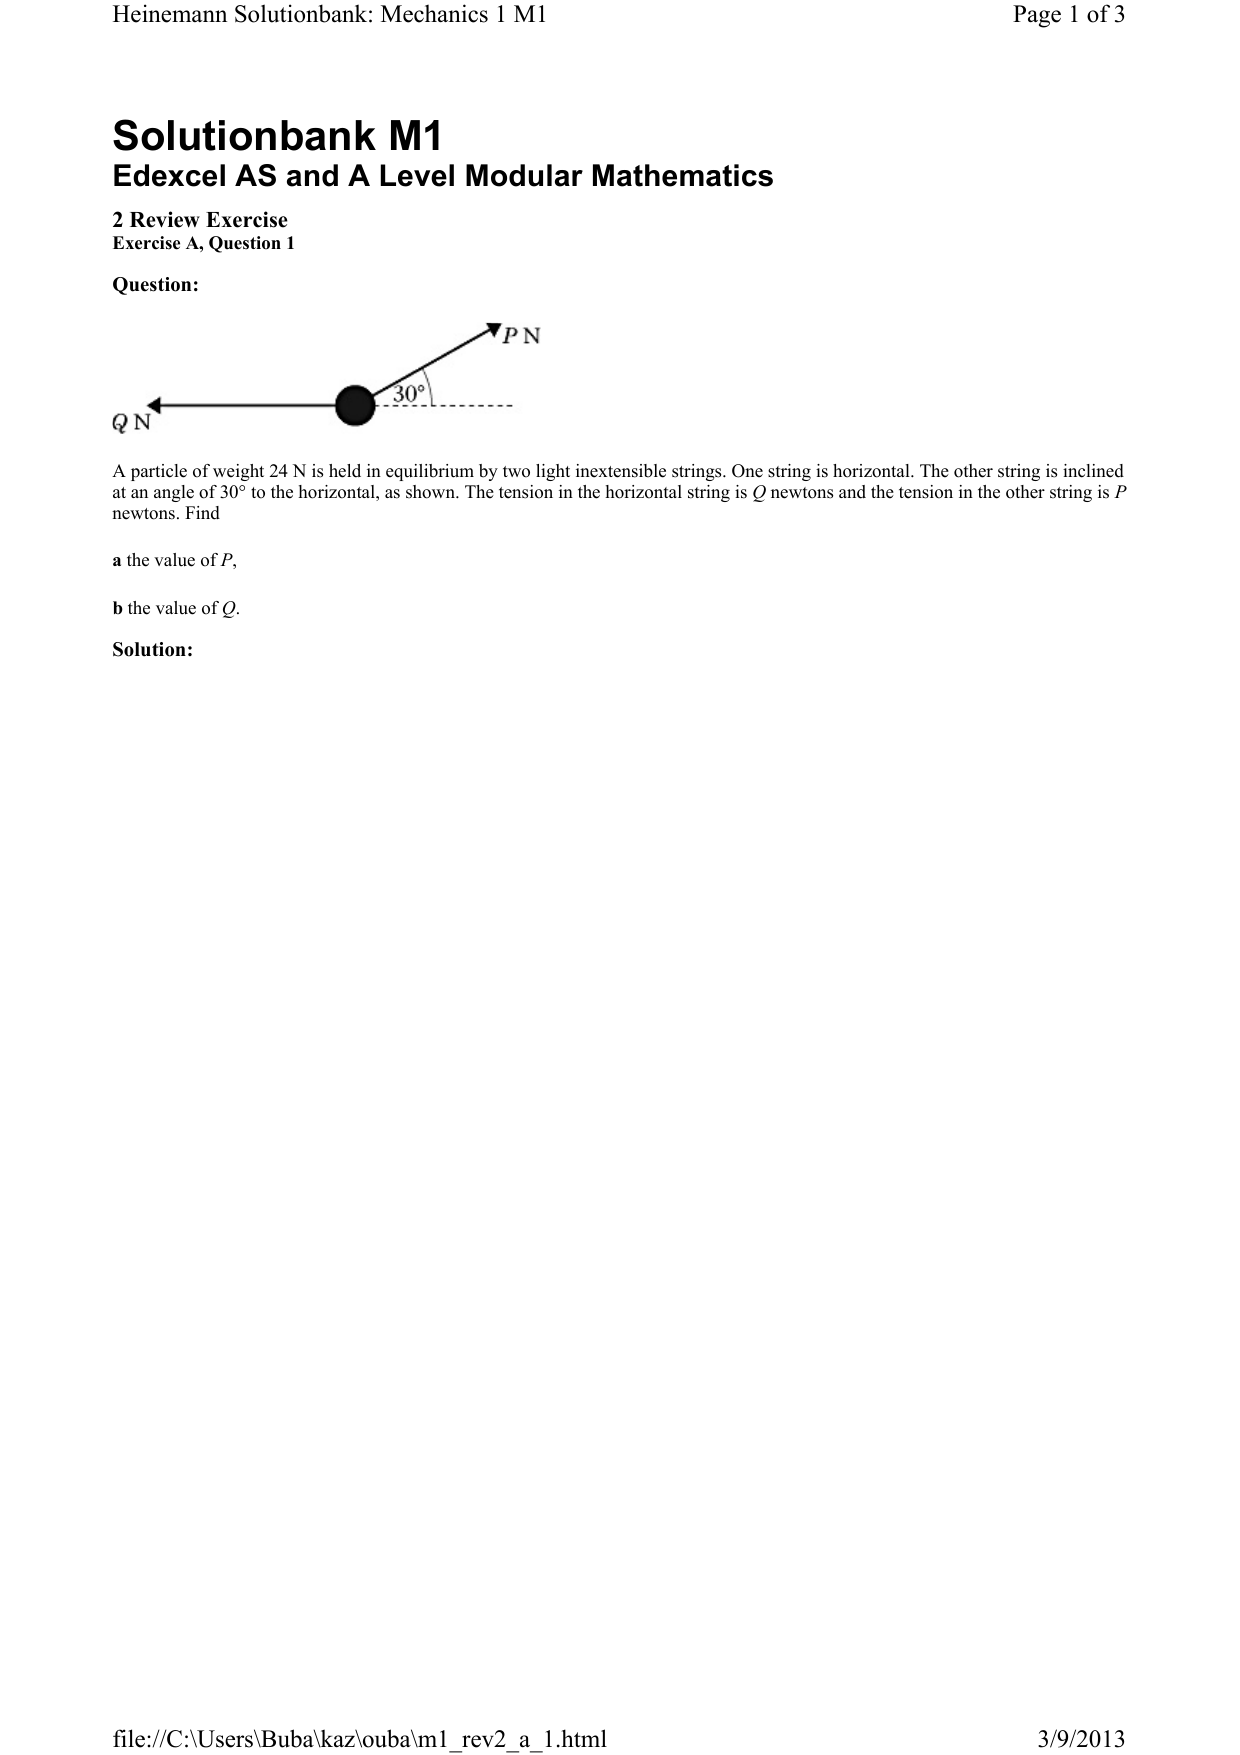 EDEXCEL M1 SOLUTION BANK PDF